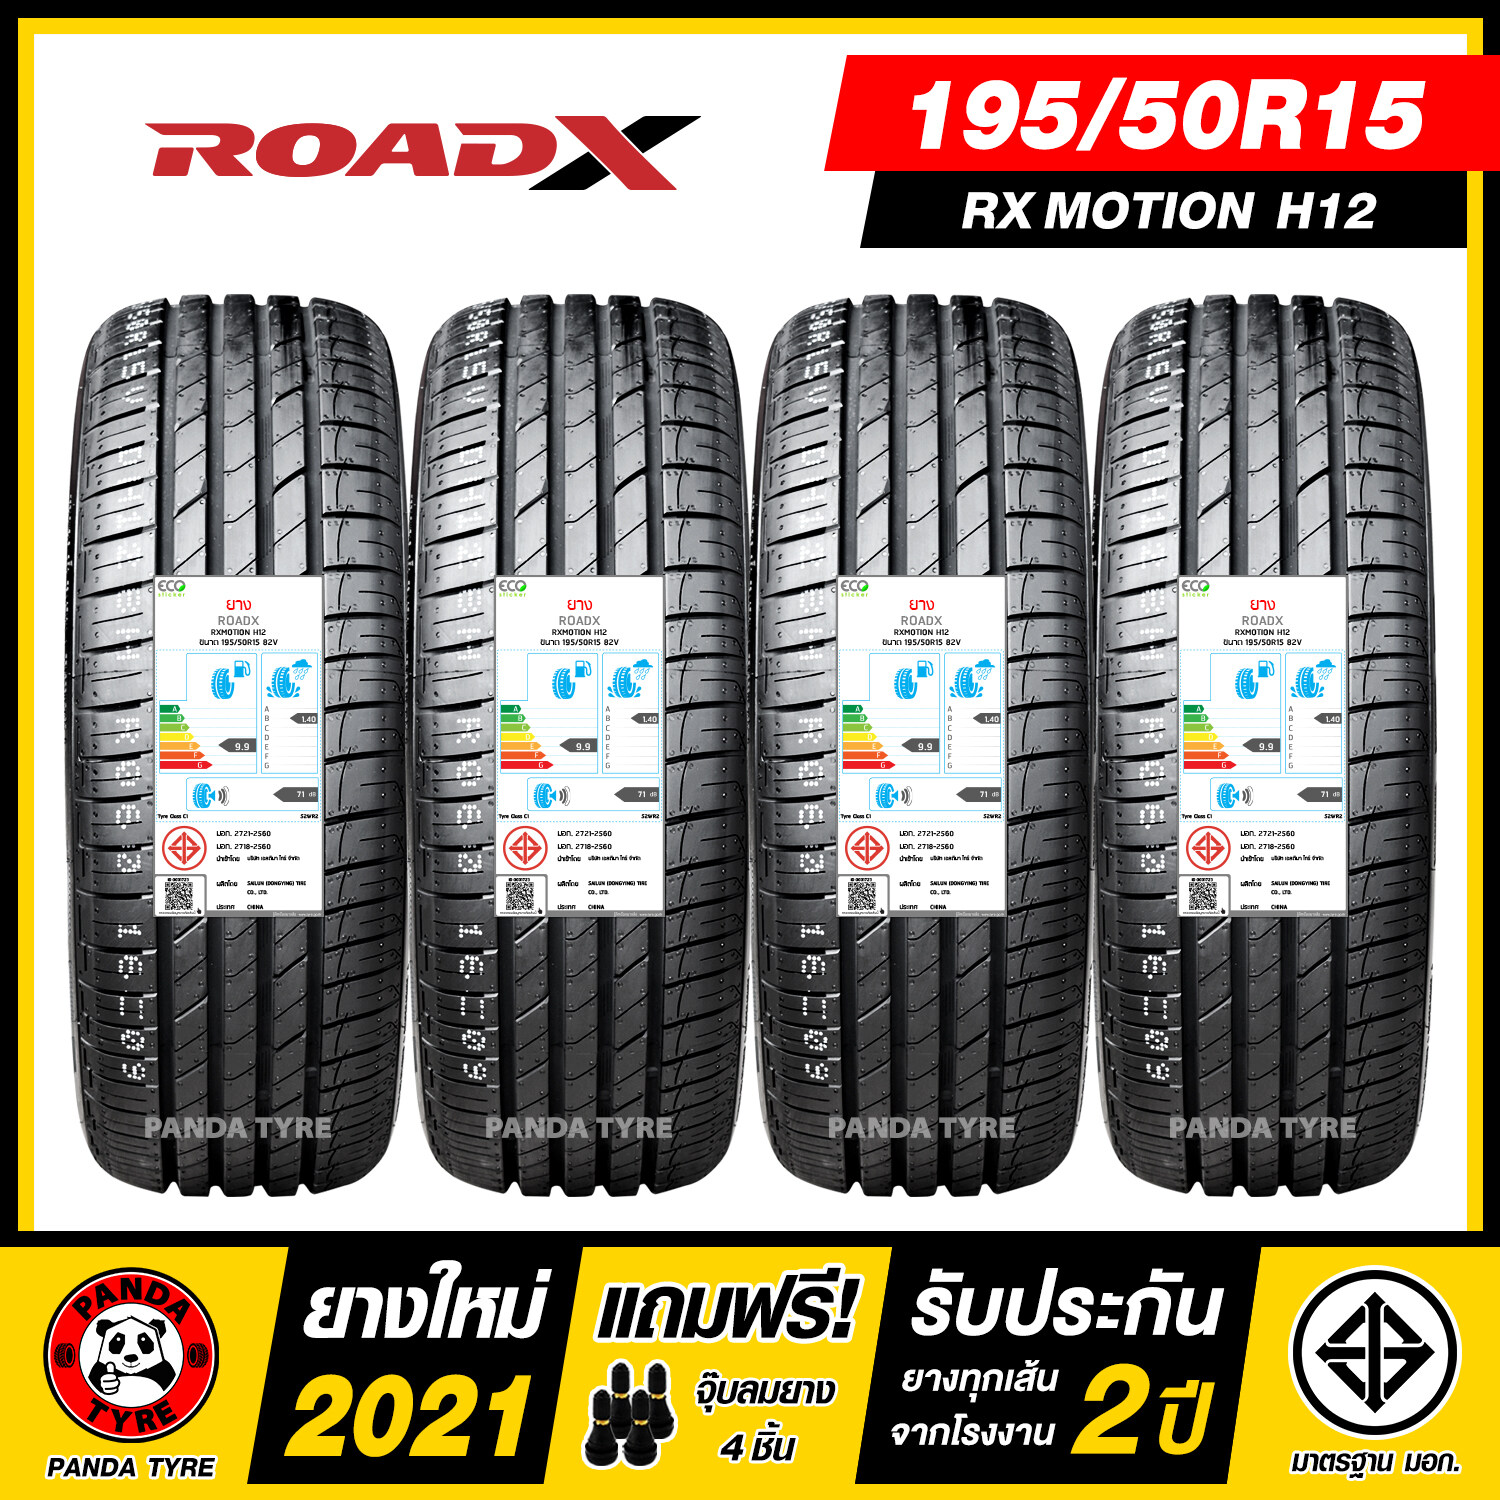 ROADX 195/50R15 ยางรถยนต์ขอบ15 รุ่น RX MOTION H12 - 4 เส้น (ยางใหม่ผลิตปี 2021)